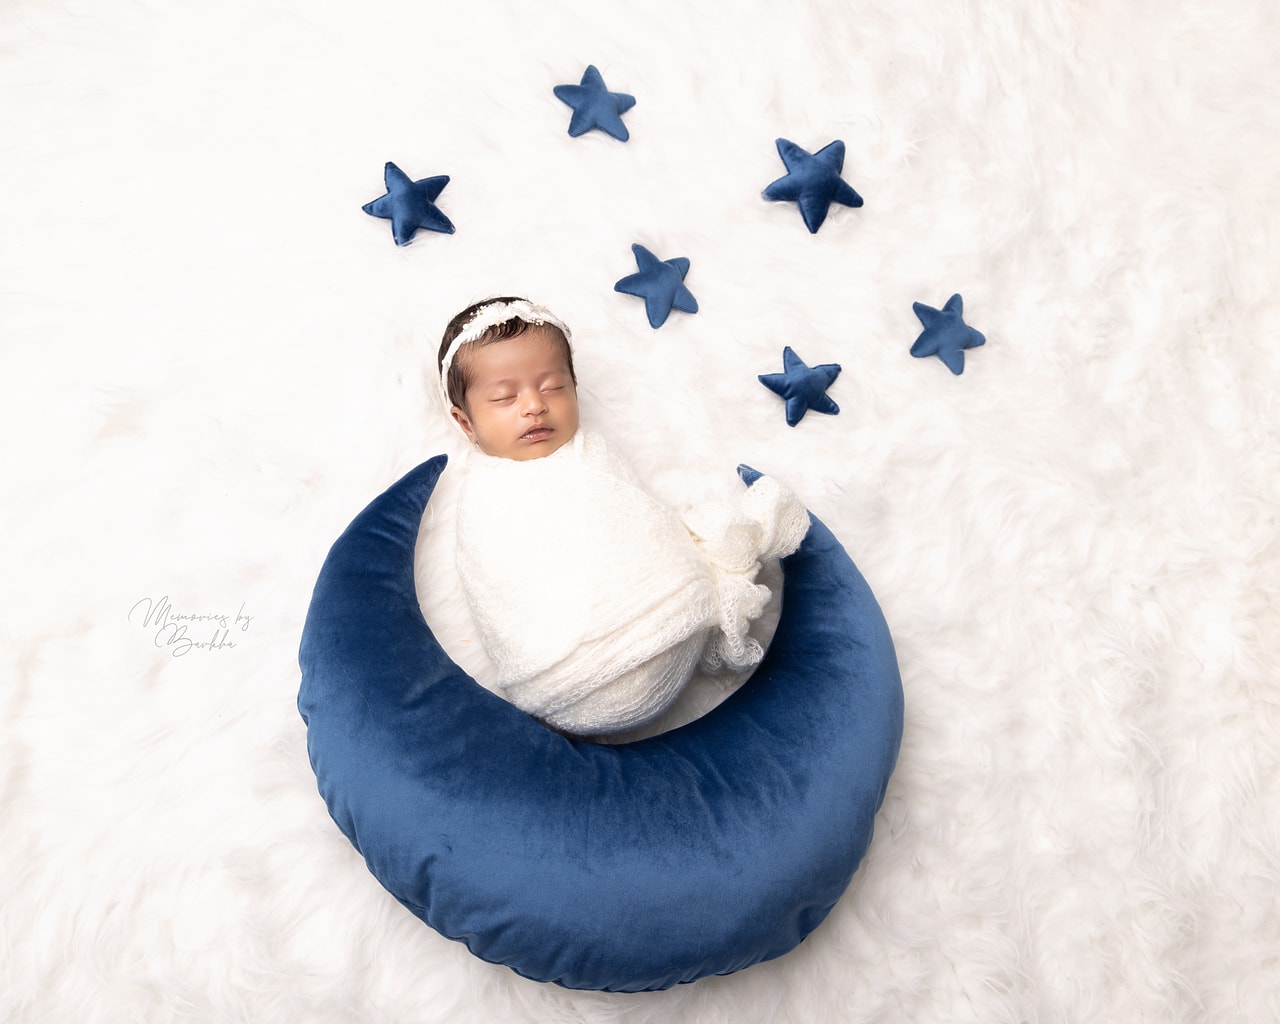 Best newborn photoshoot in India| Newborn photography images | India